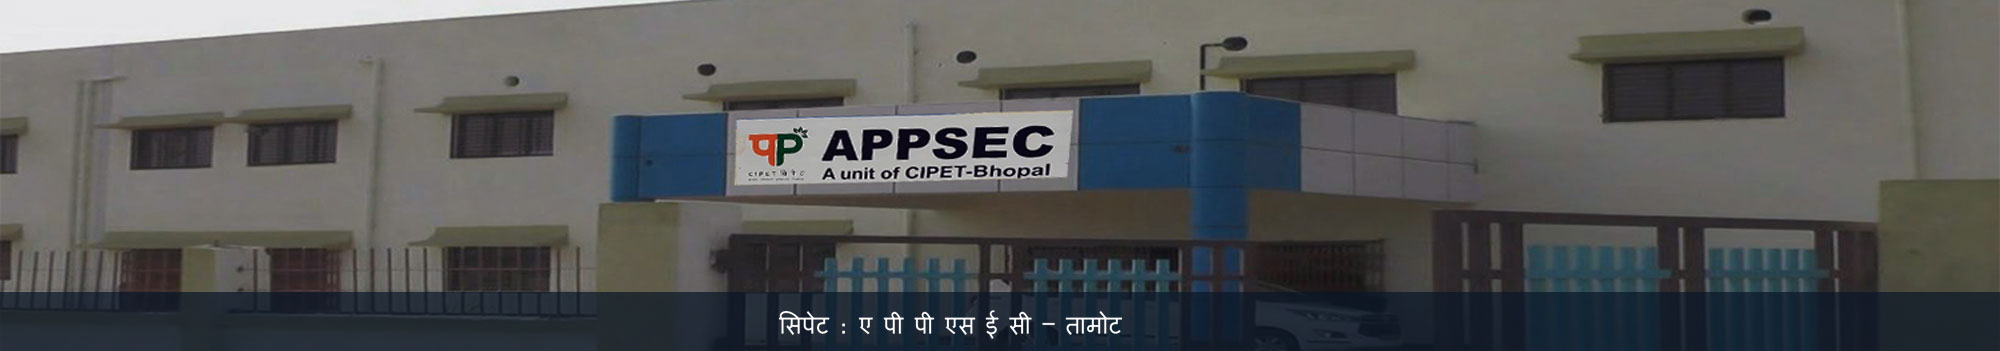 CIPET : APPSEC - Tamot, Madhya Pradesh